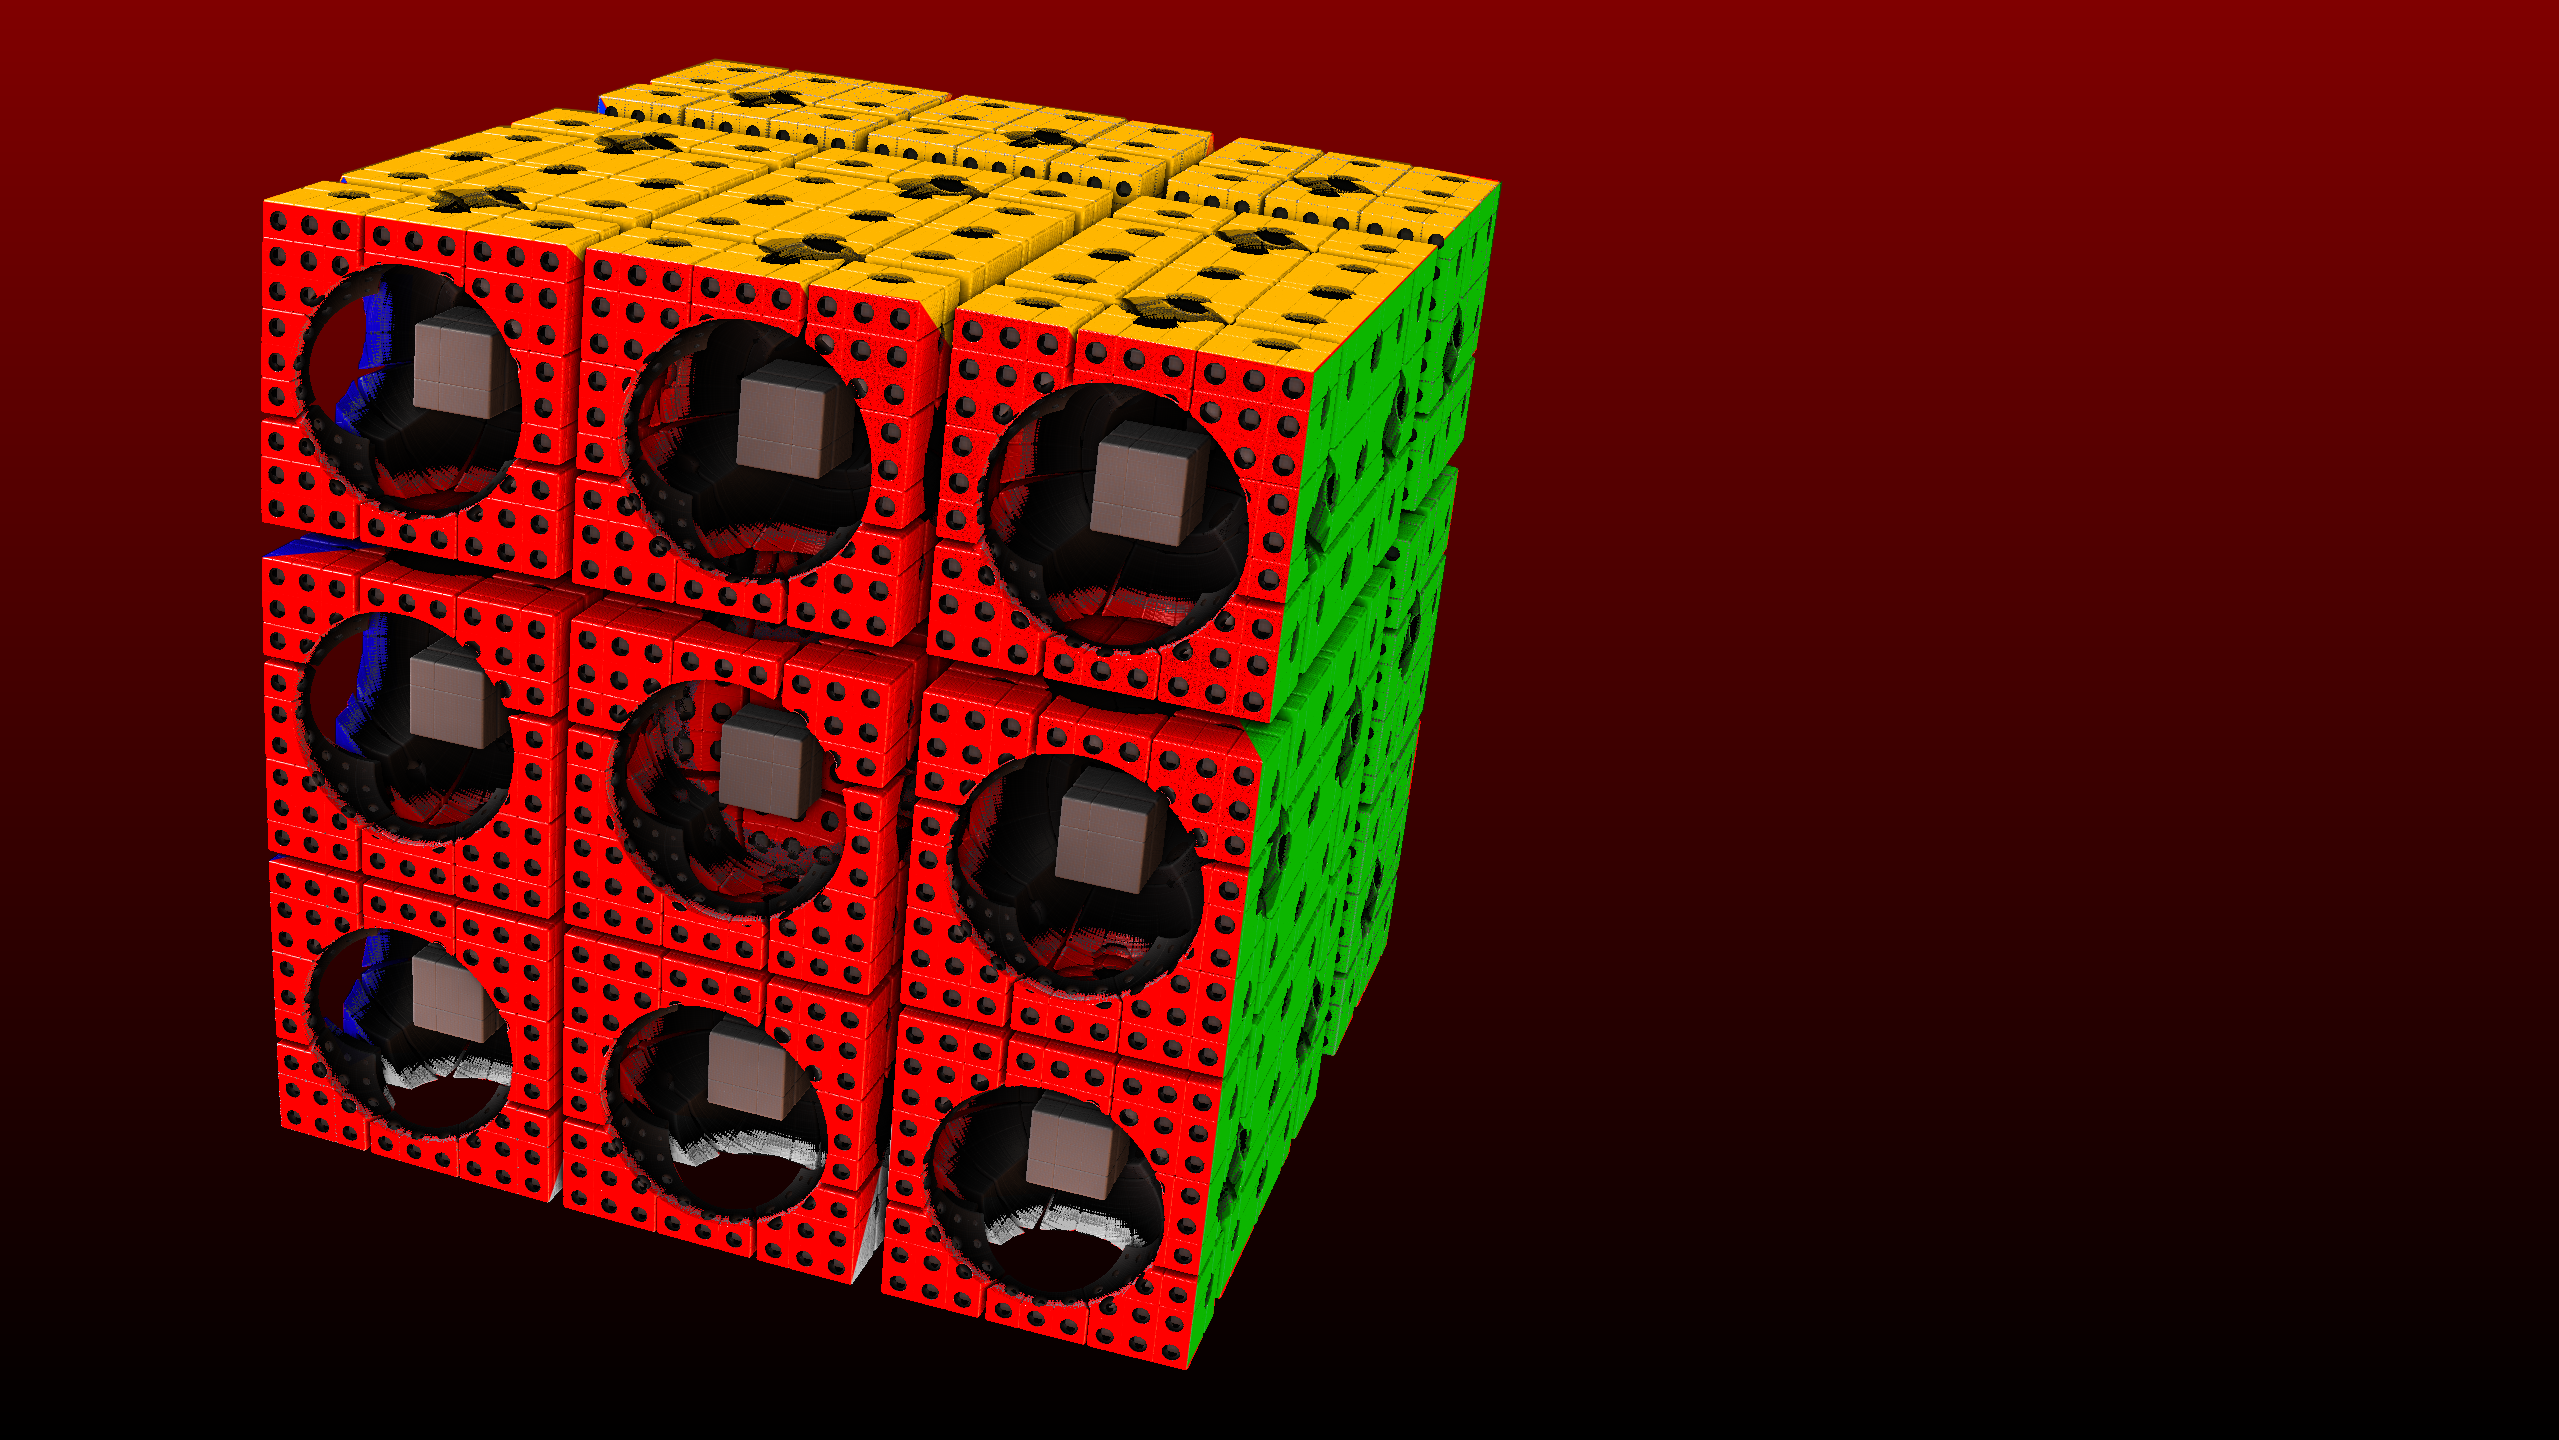 Created by ScrambledRubiks using Mandelbulb 3d.